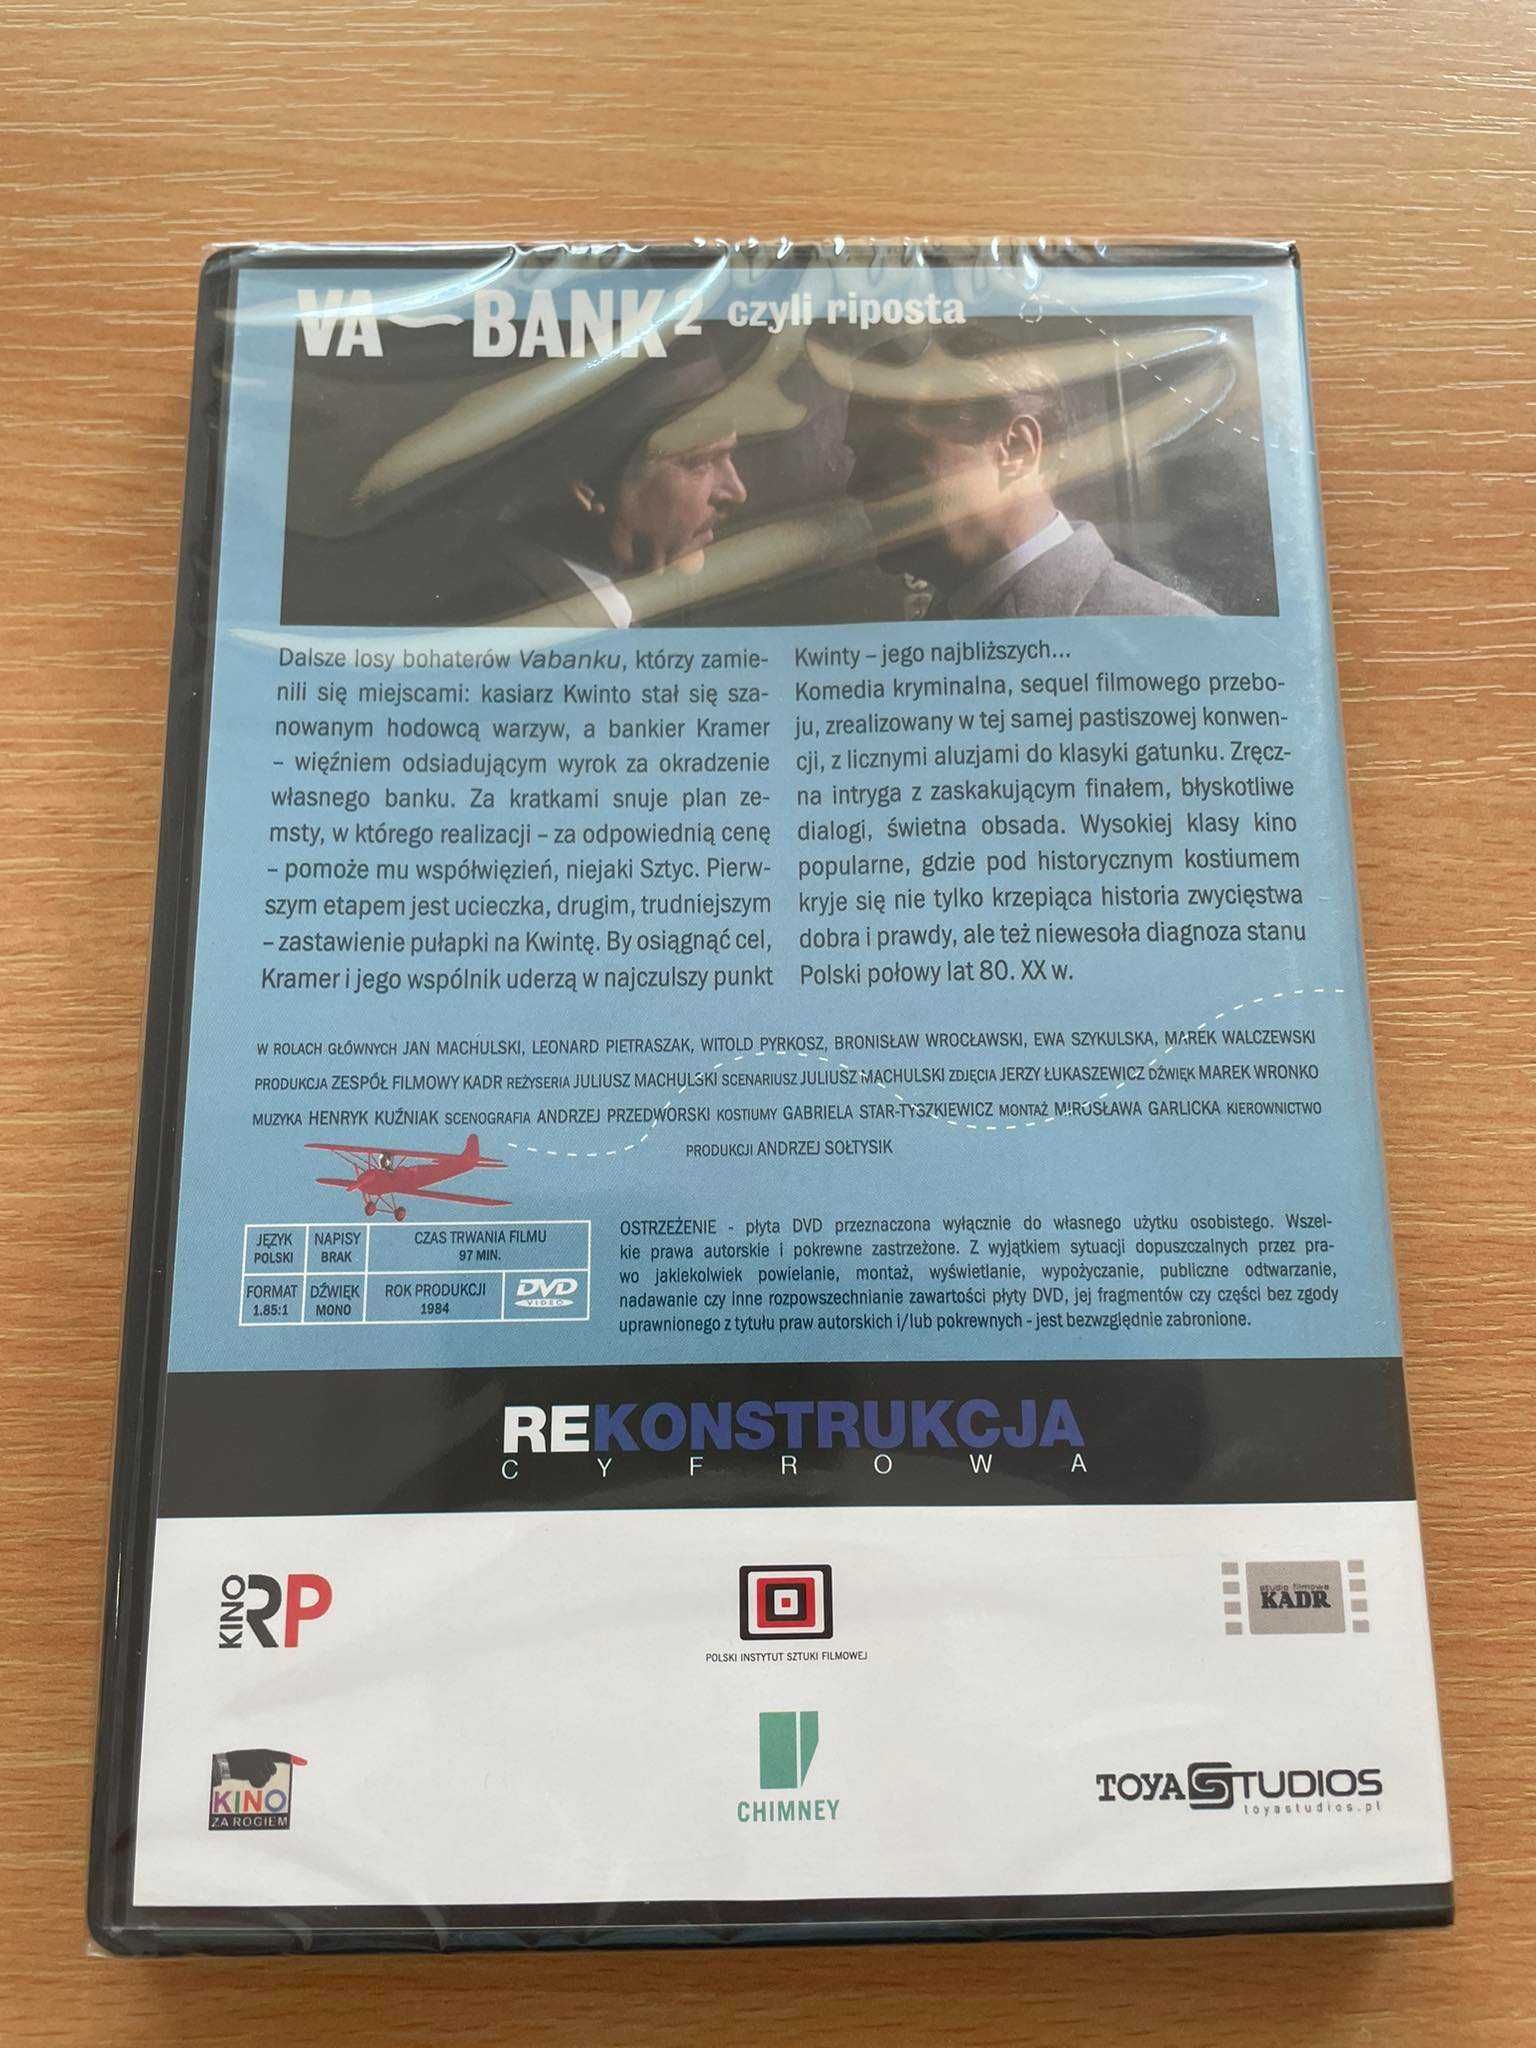 Film Vabank 2 czyli riposta płyta DVD Juliusz Machulski Rekonstrukcja